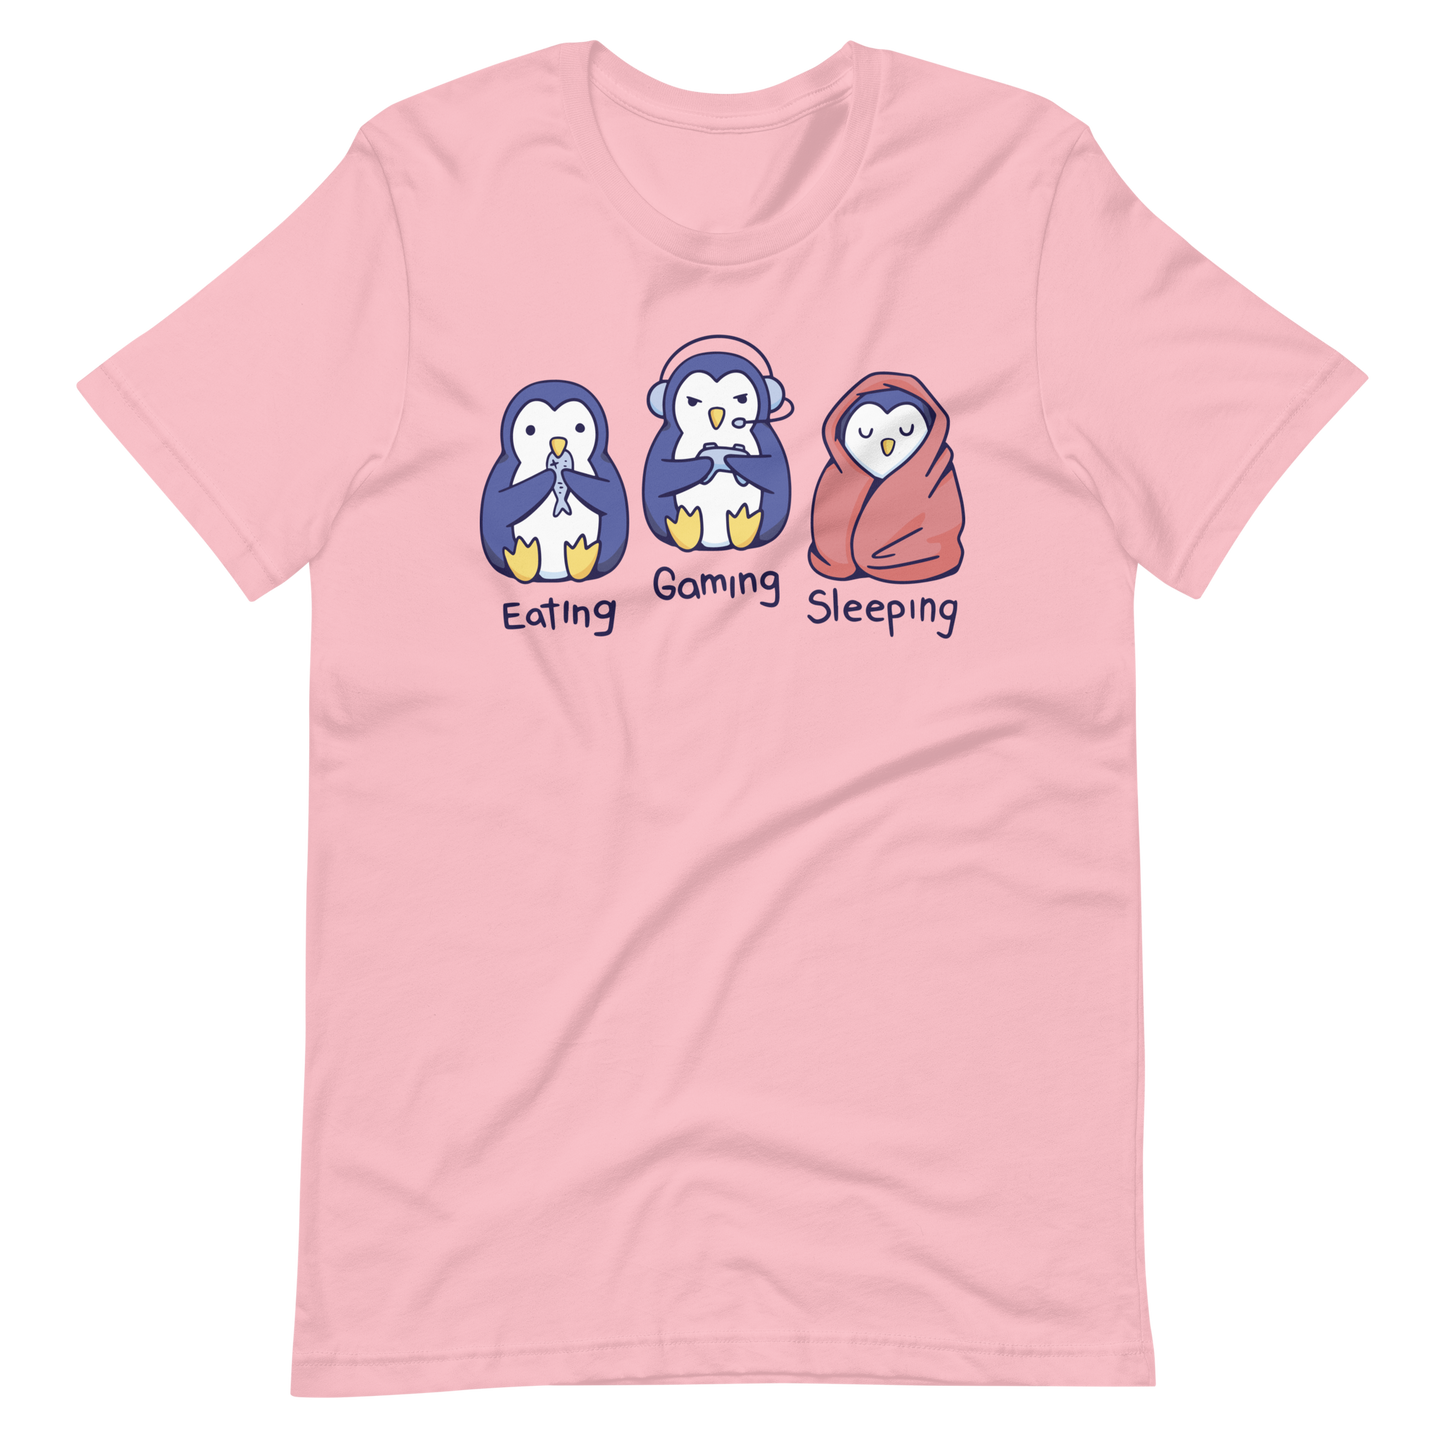 Eating gaming sleeping penguin |Unisex t-shirt